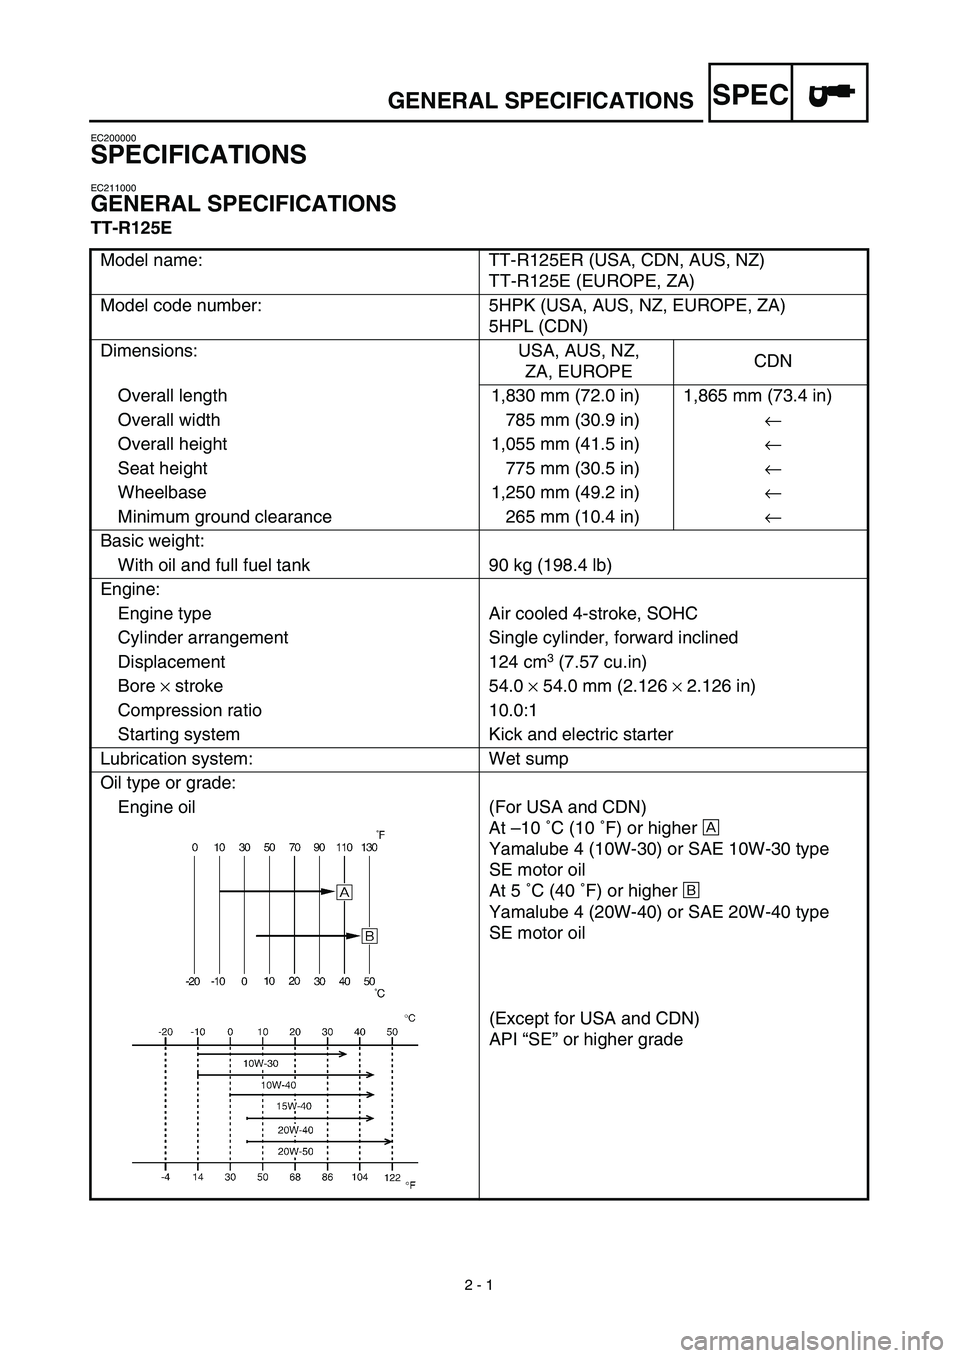 YAMAHA TTR125 2003  Owners Manual SPEC
 
2 - 1 
GENERAL SPECIFICATIONS 
EC200000 
SPECIFICATIONS 
EC211000 
GENERAL SPECIFICATIONS 
TT-R125E  
Model name: TT-R125ER (USA, CDN, AUS, NZ)
TT-R125E (EUROPE, ZA)
Model code number: 5HPK (US